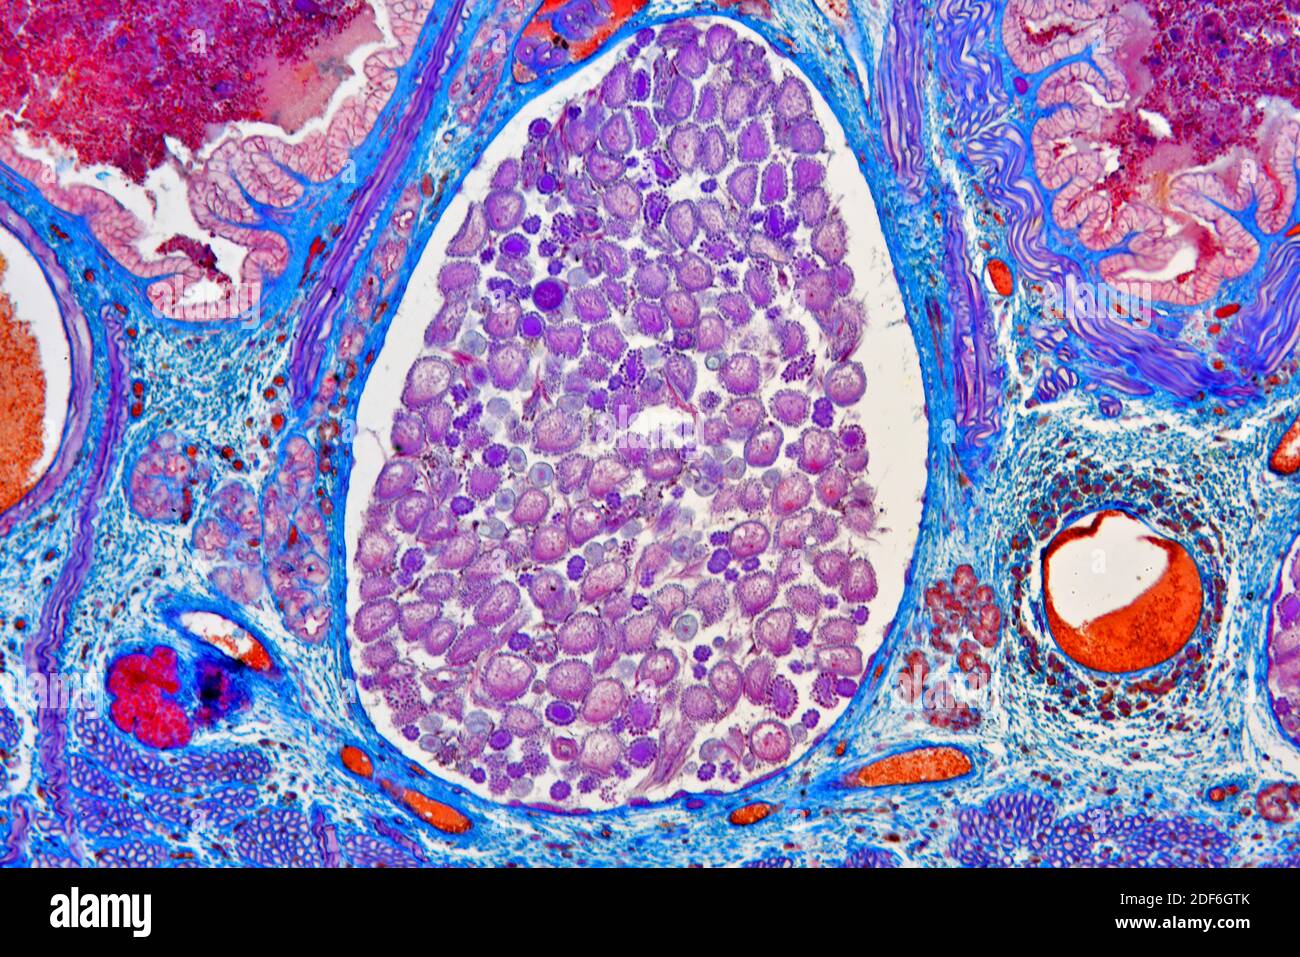 European medicinal leech (Hirudo medicinalis) cross section showing uterus and intestine and crop diverticulum. Optical microscope X100. Stock Photo